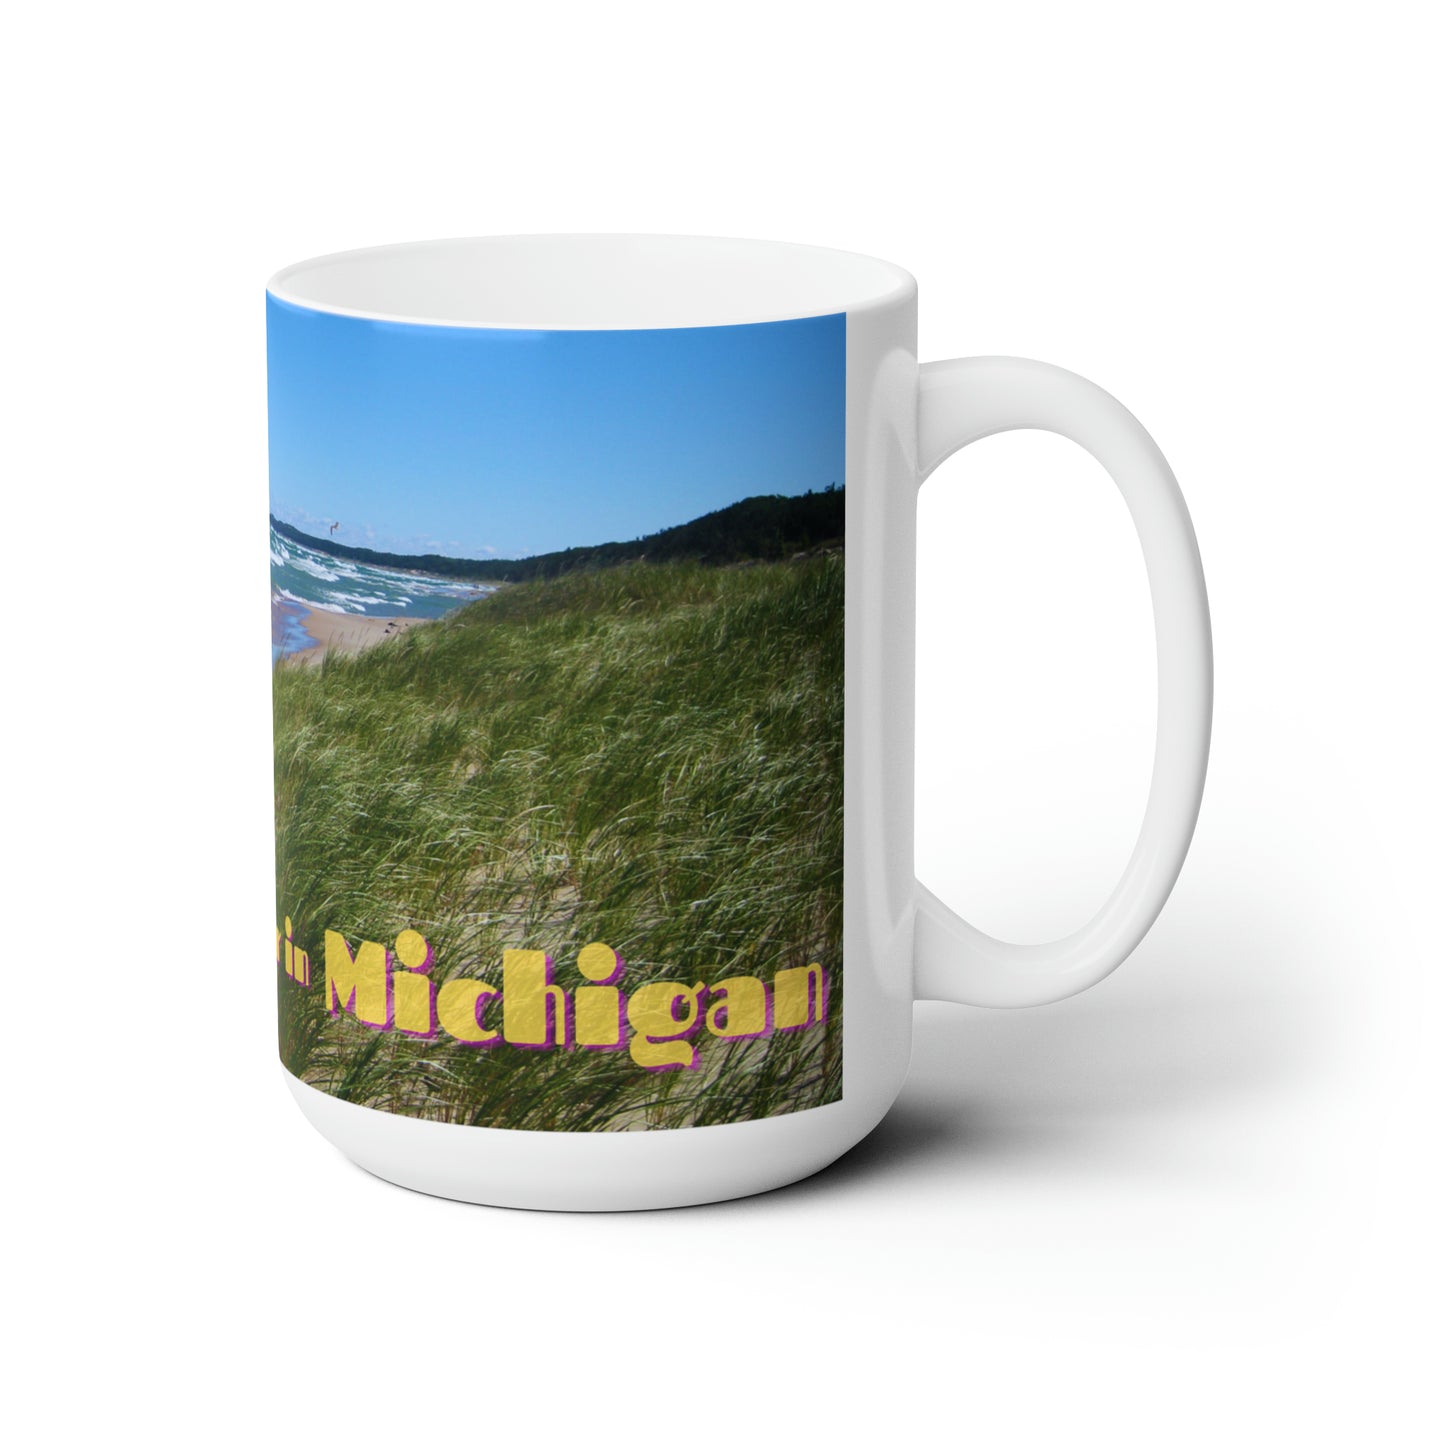 "The Beaches are Better in Michigan" 15oz Ceramic Mug